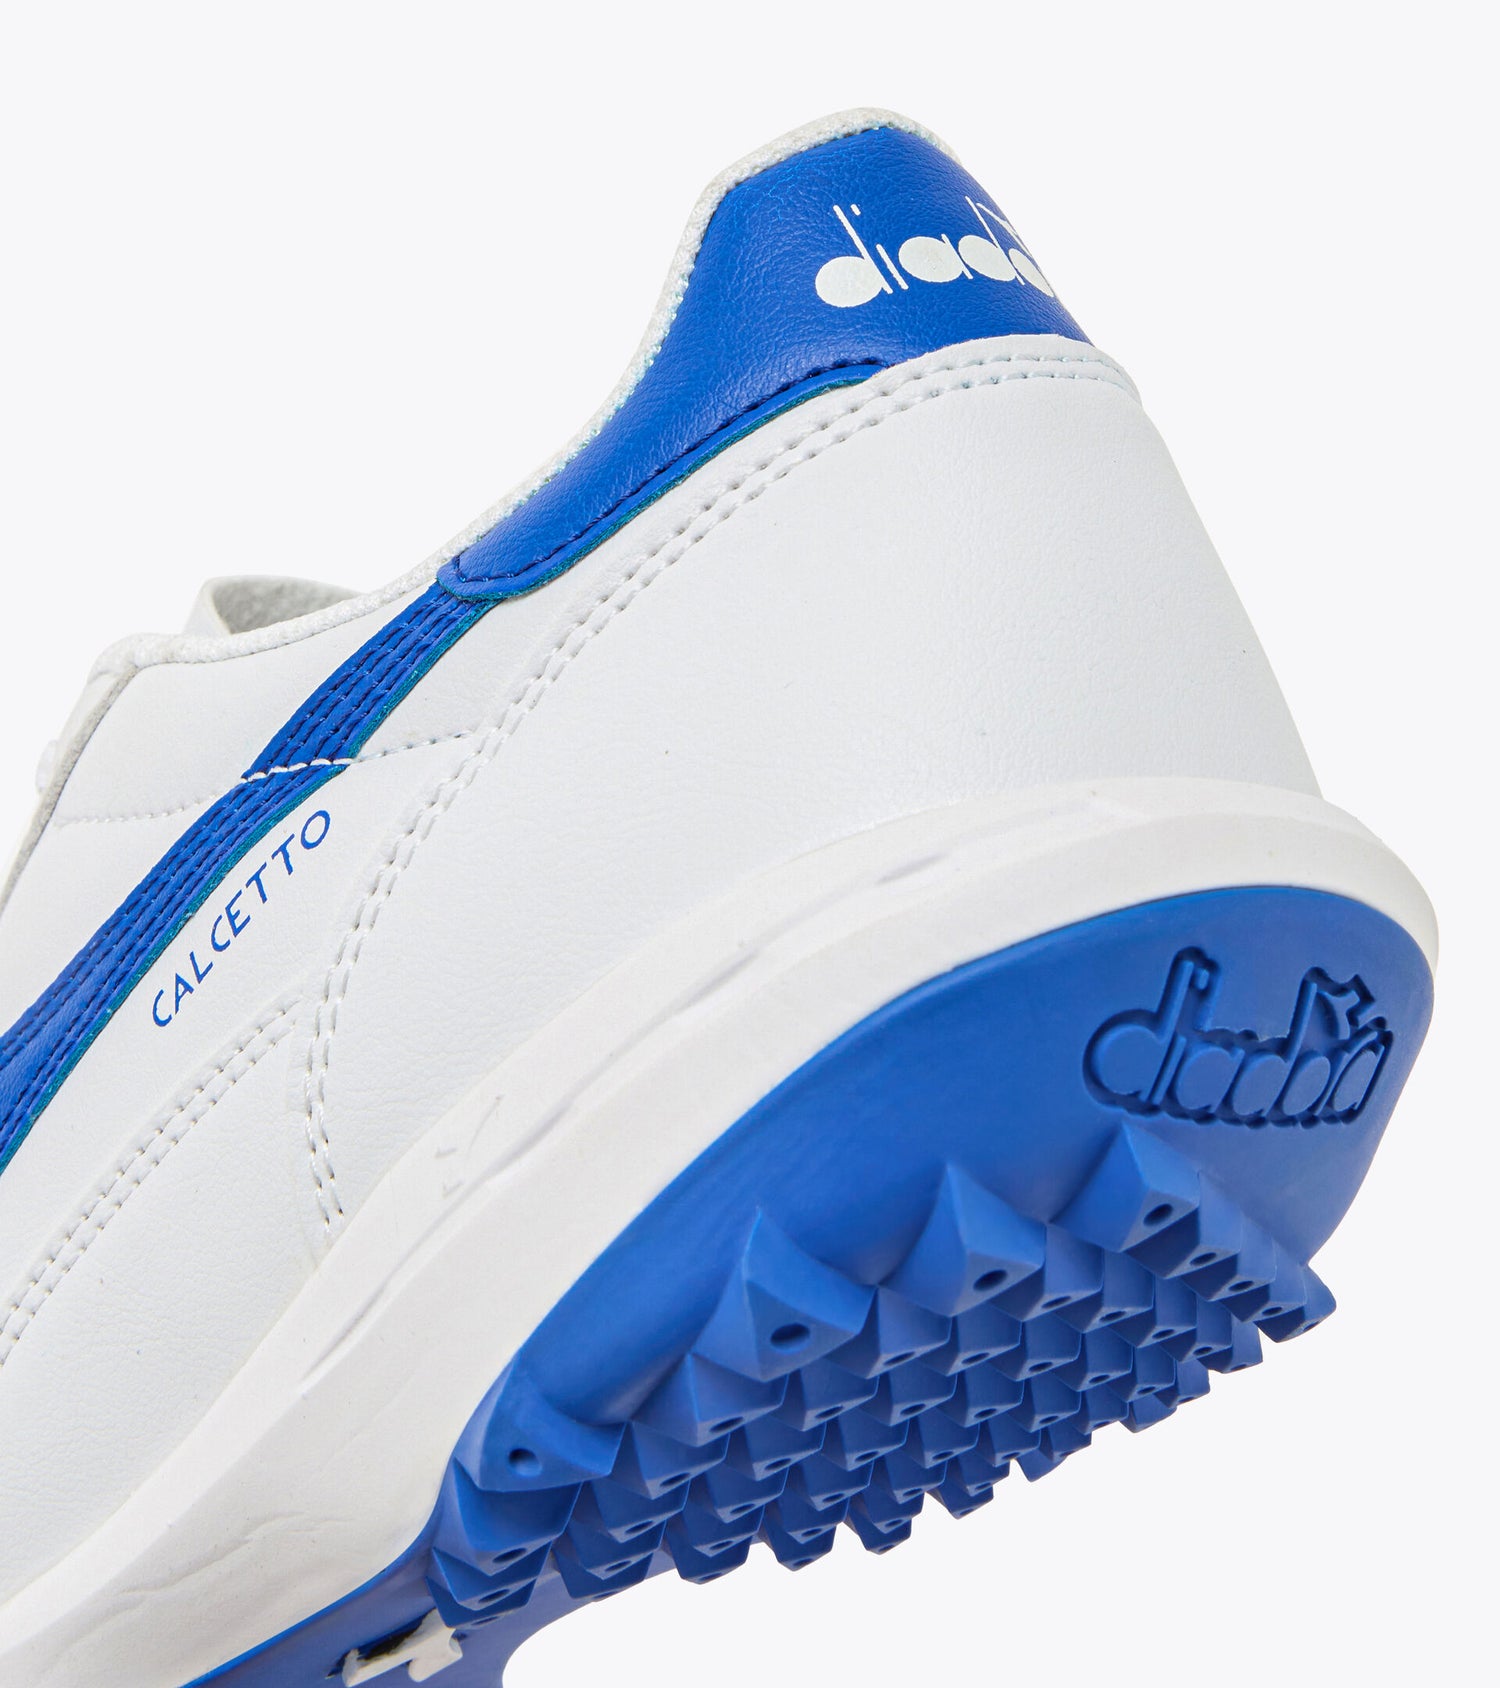 Diadora Calcetto II LT Turf Soccer Shoe - White/Royal Blue